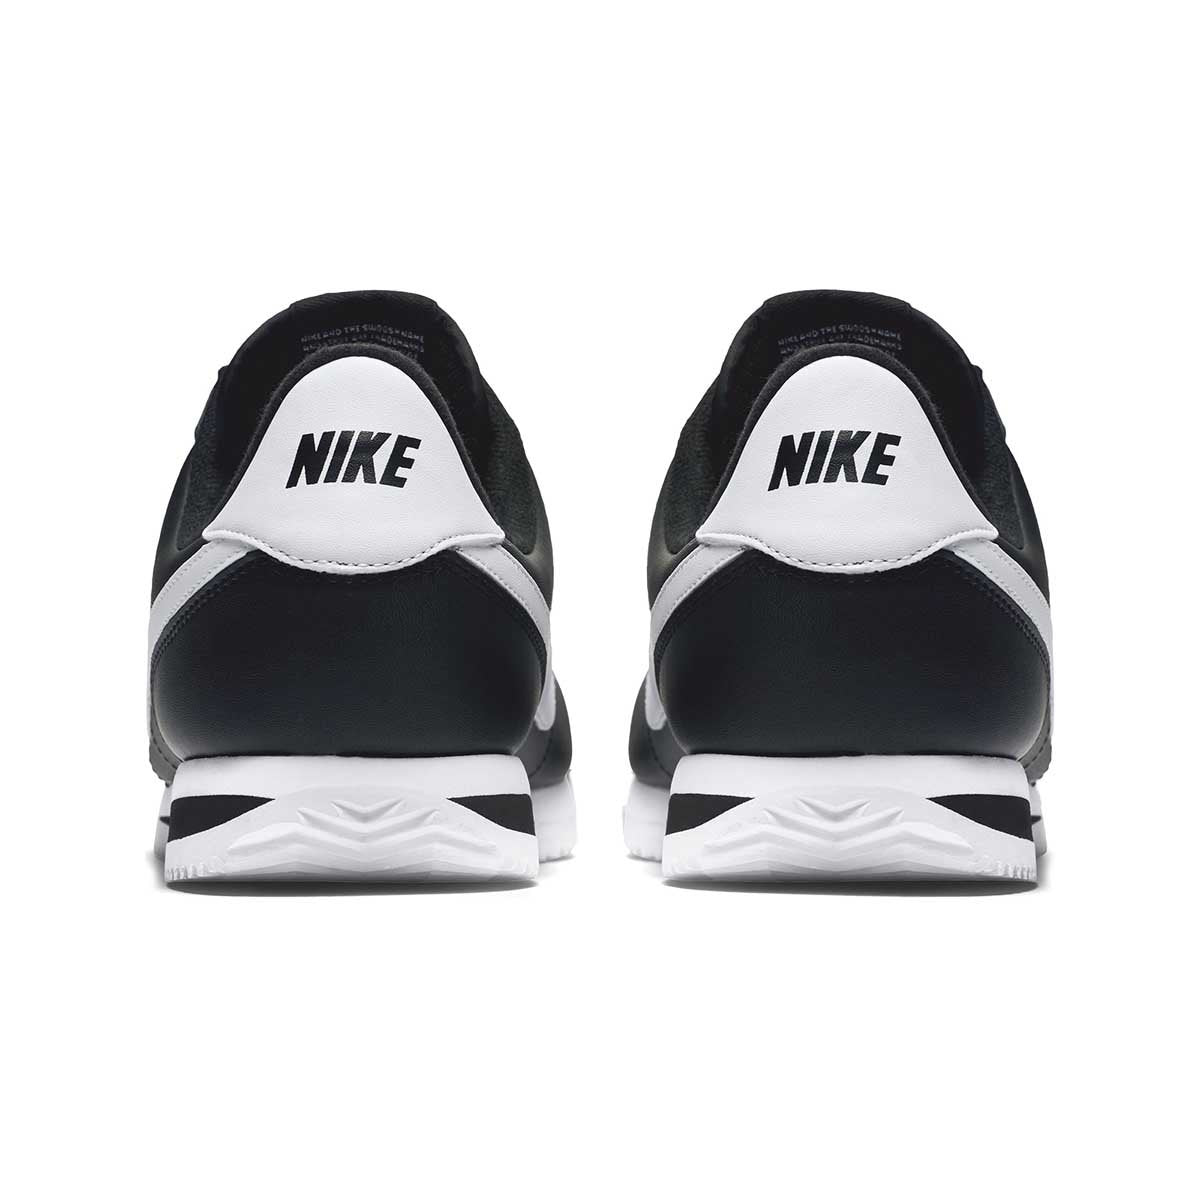 Nike Men's Cortez Basic MC QS Casual Shoe - 5